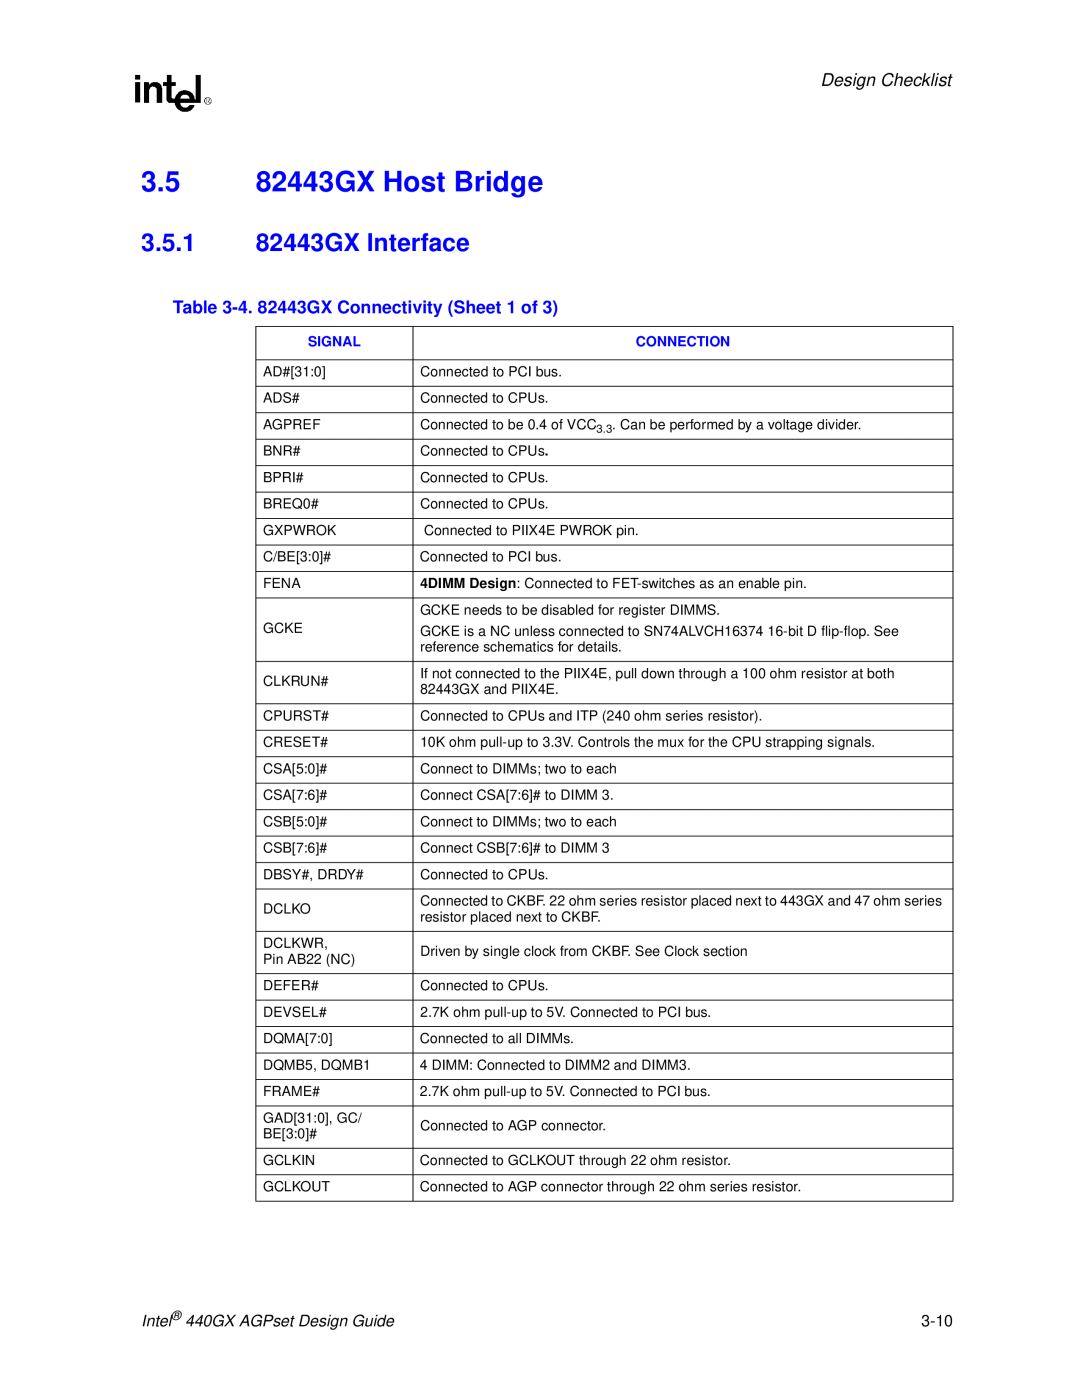 Intel 440GX 3.5 82443GX Host Bridge, 3.5.1 82443GX Interface, 4. 82443GX Connectivity Sheet 1 of, Design Checklist, 3-10 